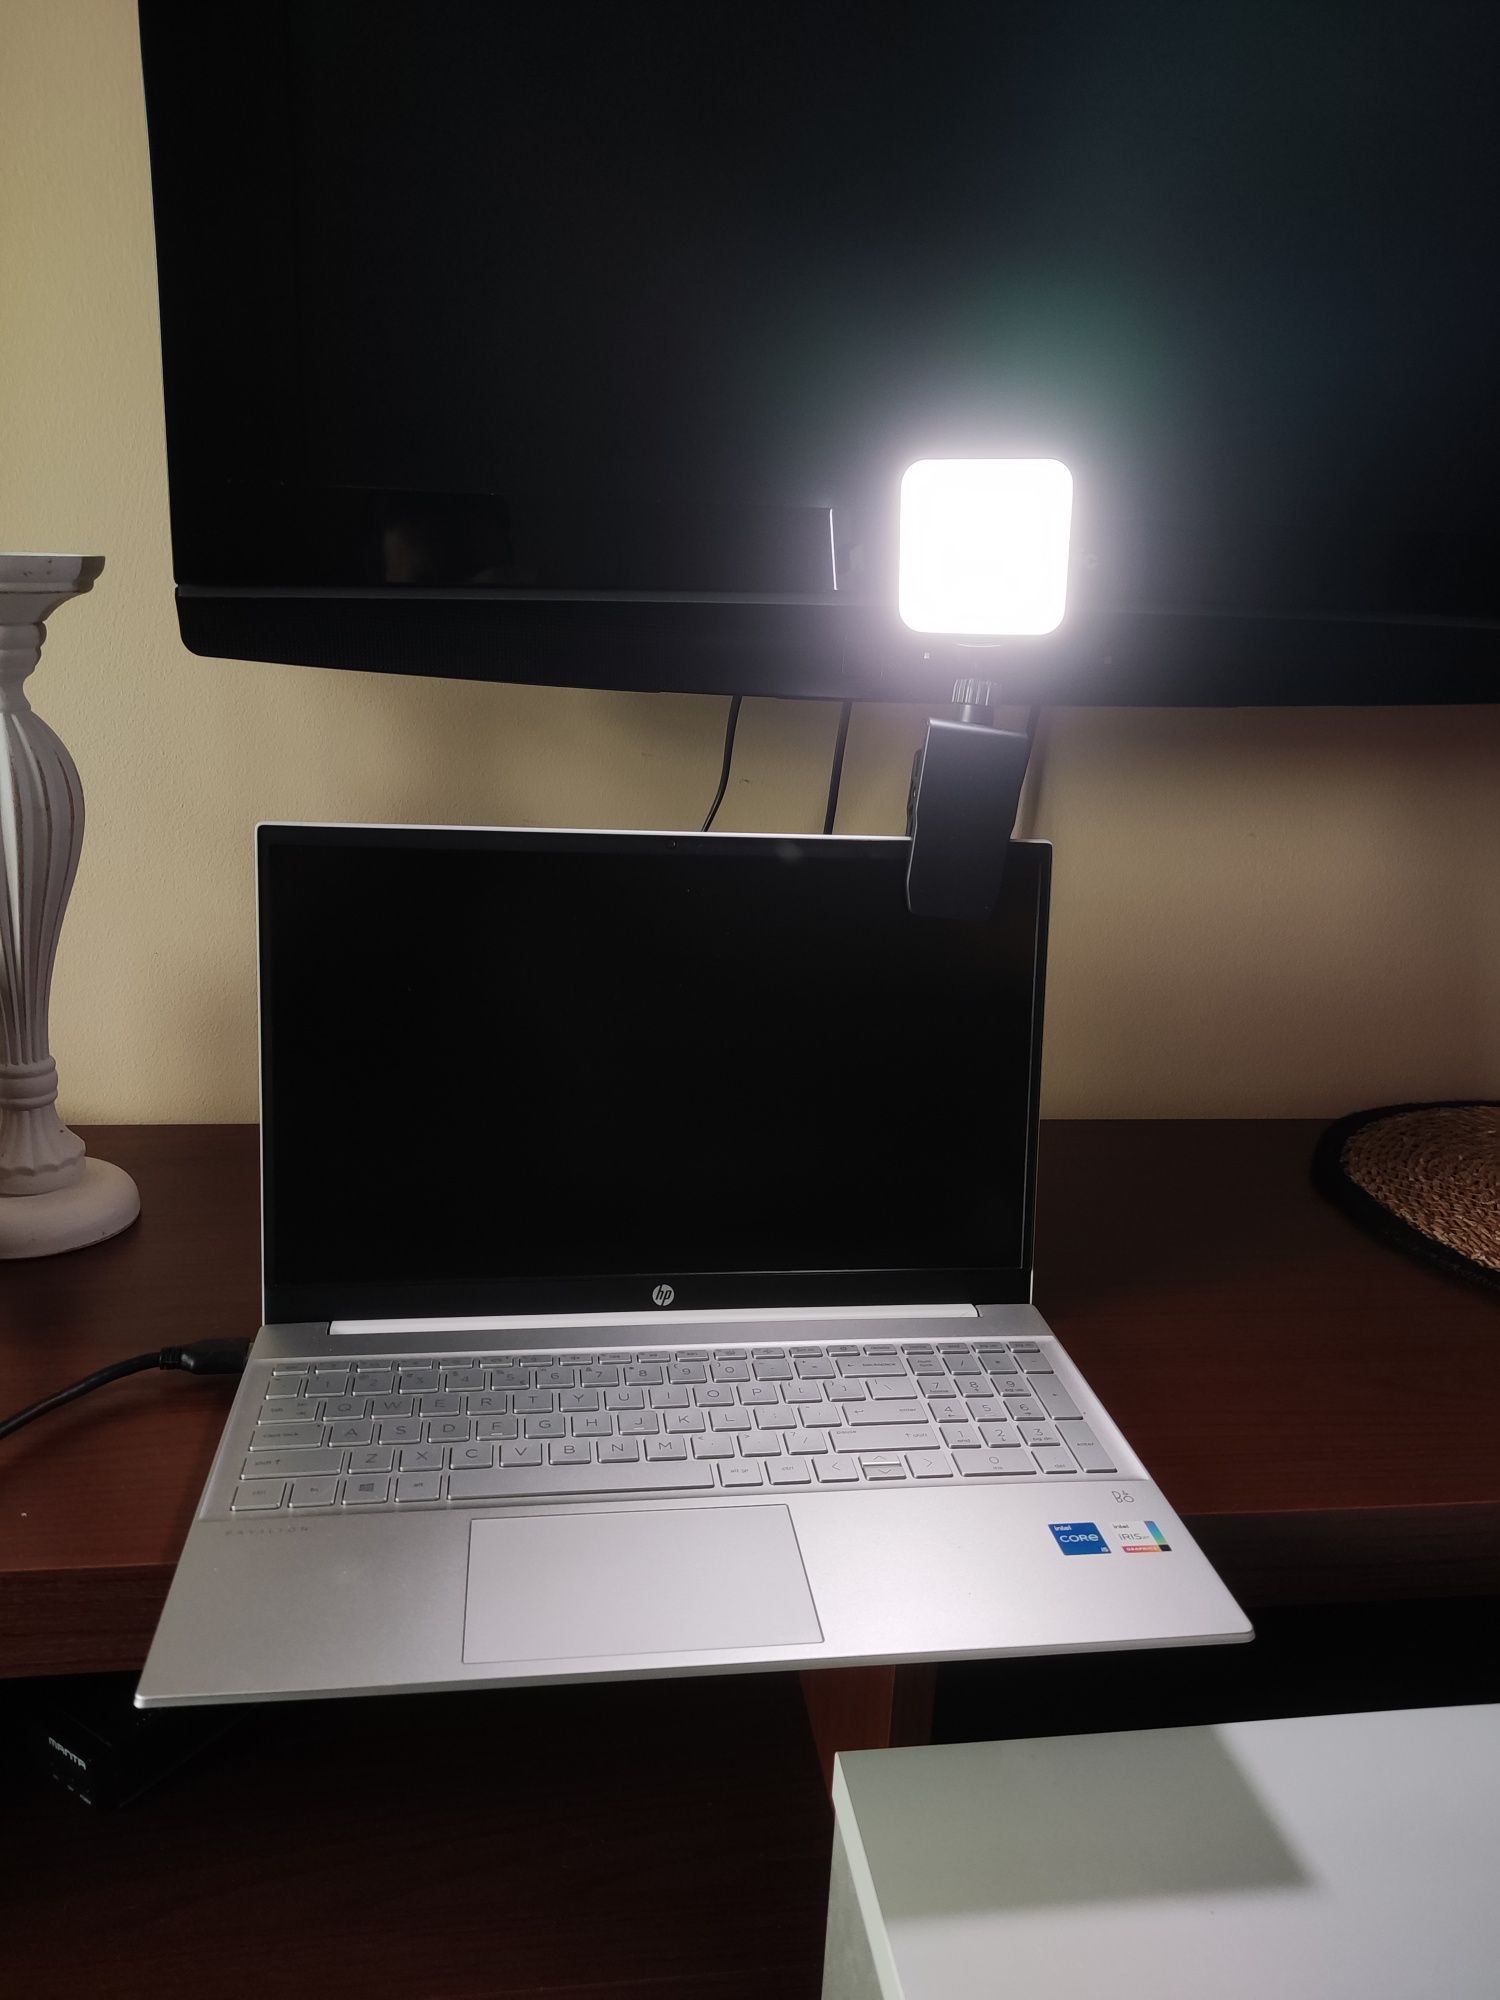 Lampa do nagrywania YouTube filmów do telefonu laptopa